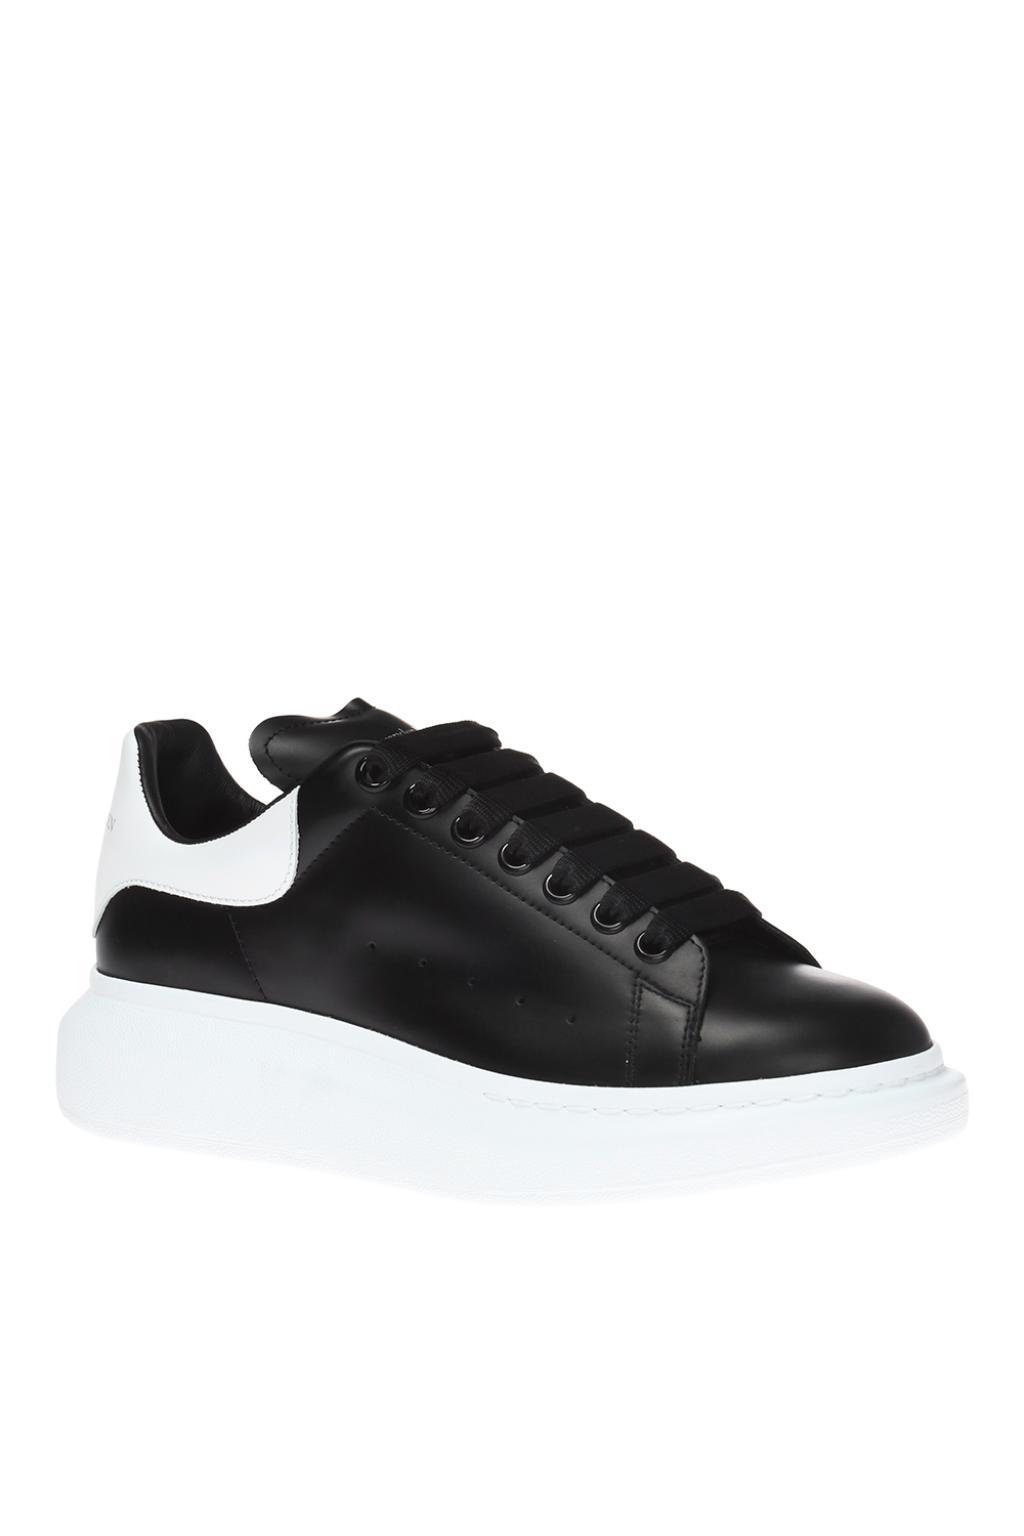 Alexander McQueen Leather Logo Sneakers in Black for Men | Lyst